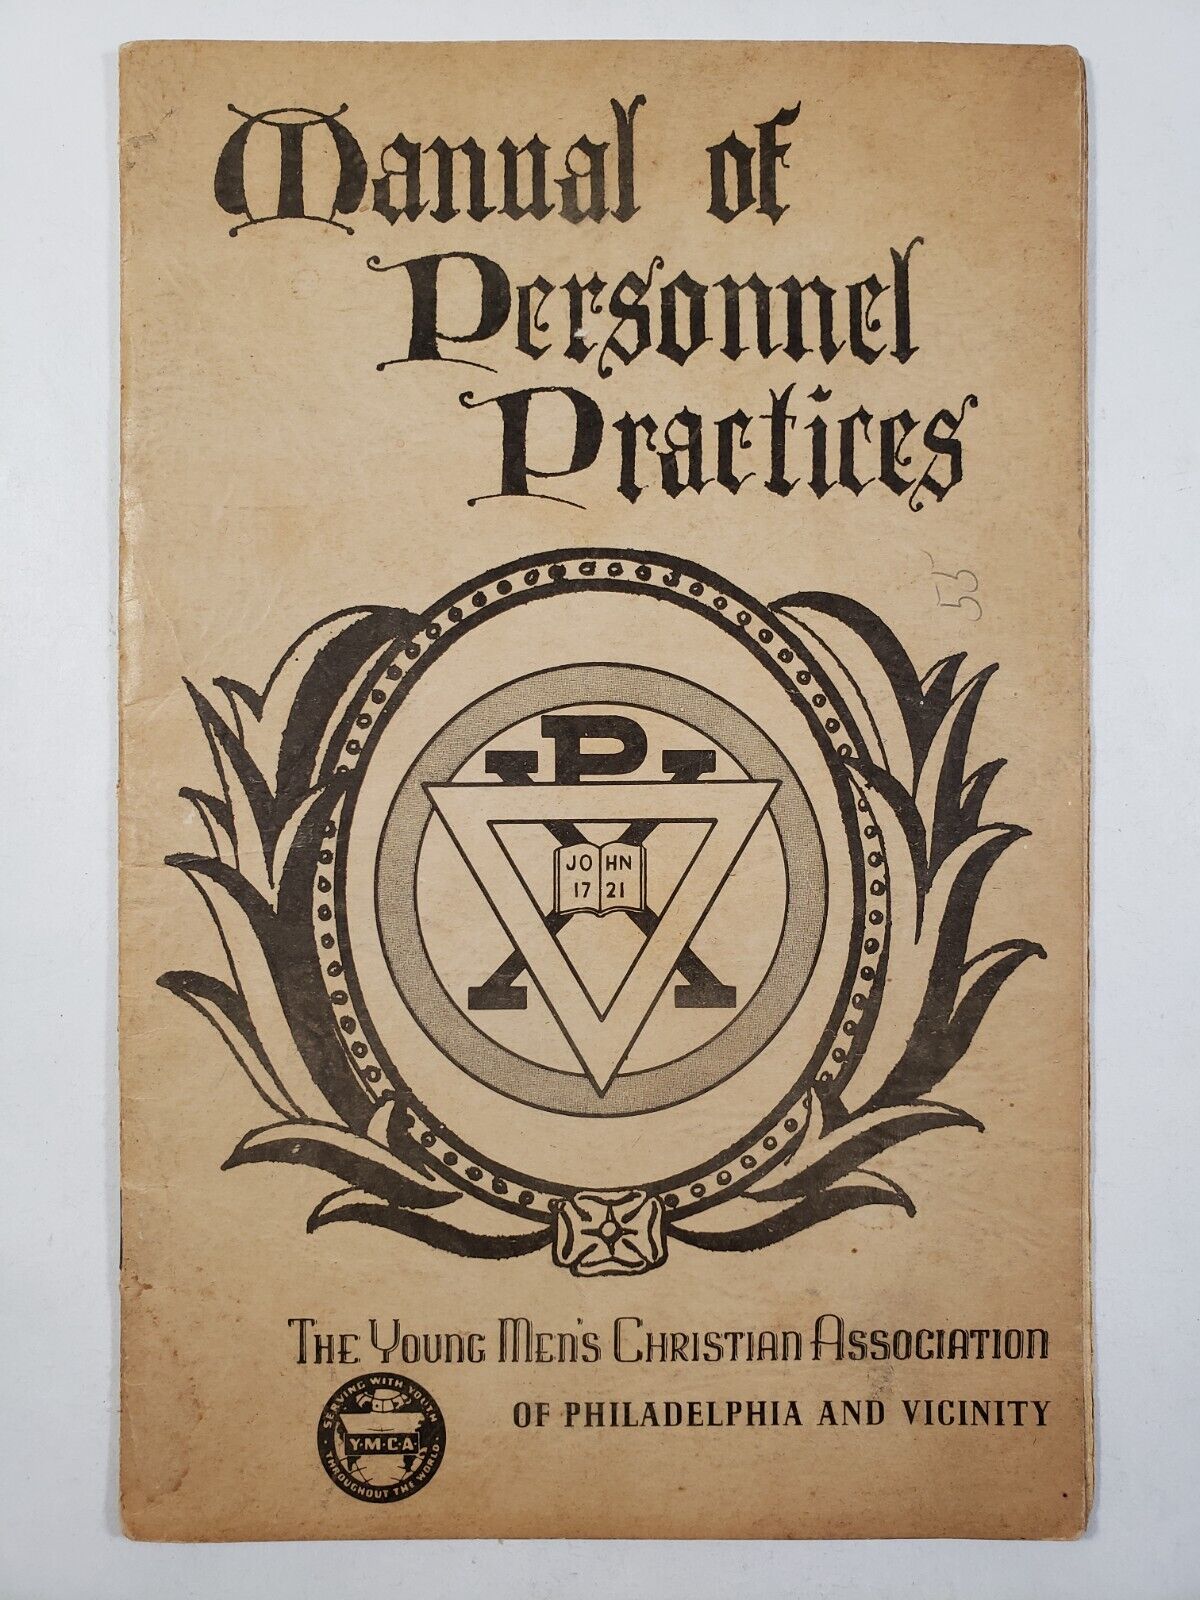 Vtg Ymca Of Philadelphia Employee Handbook Manual Of Personnel Practices 1954